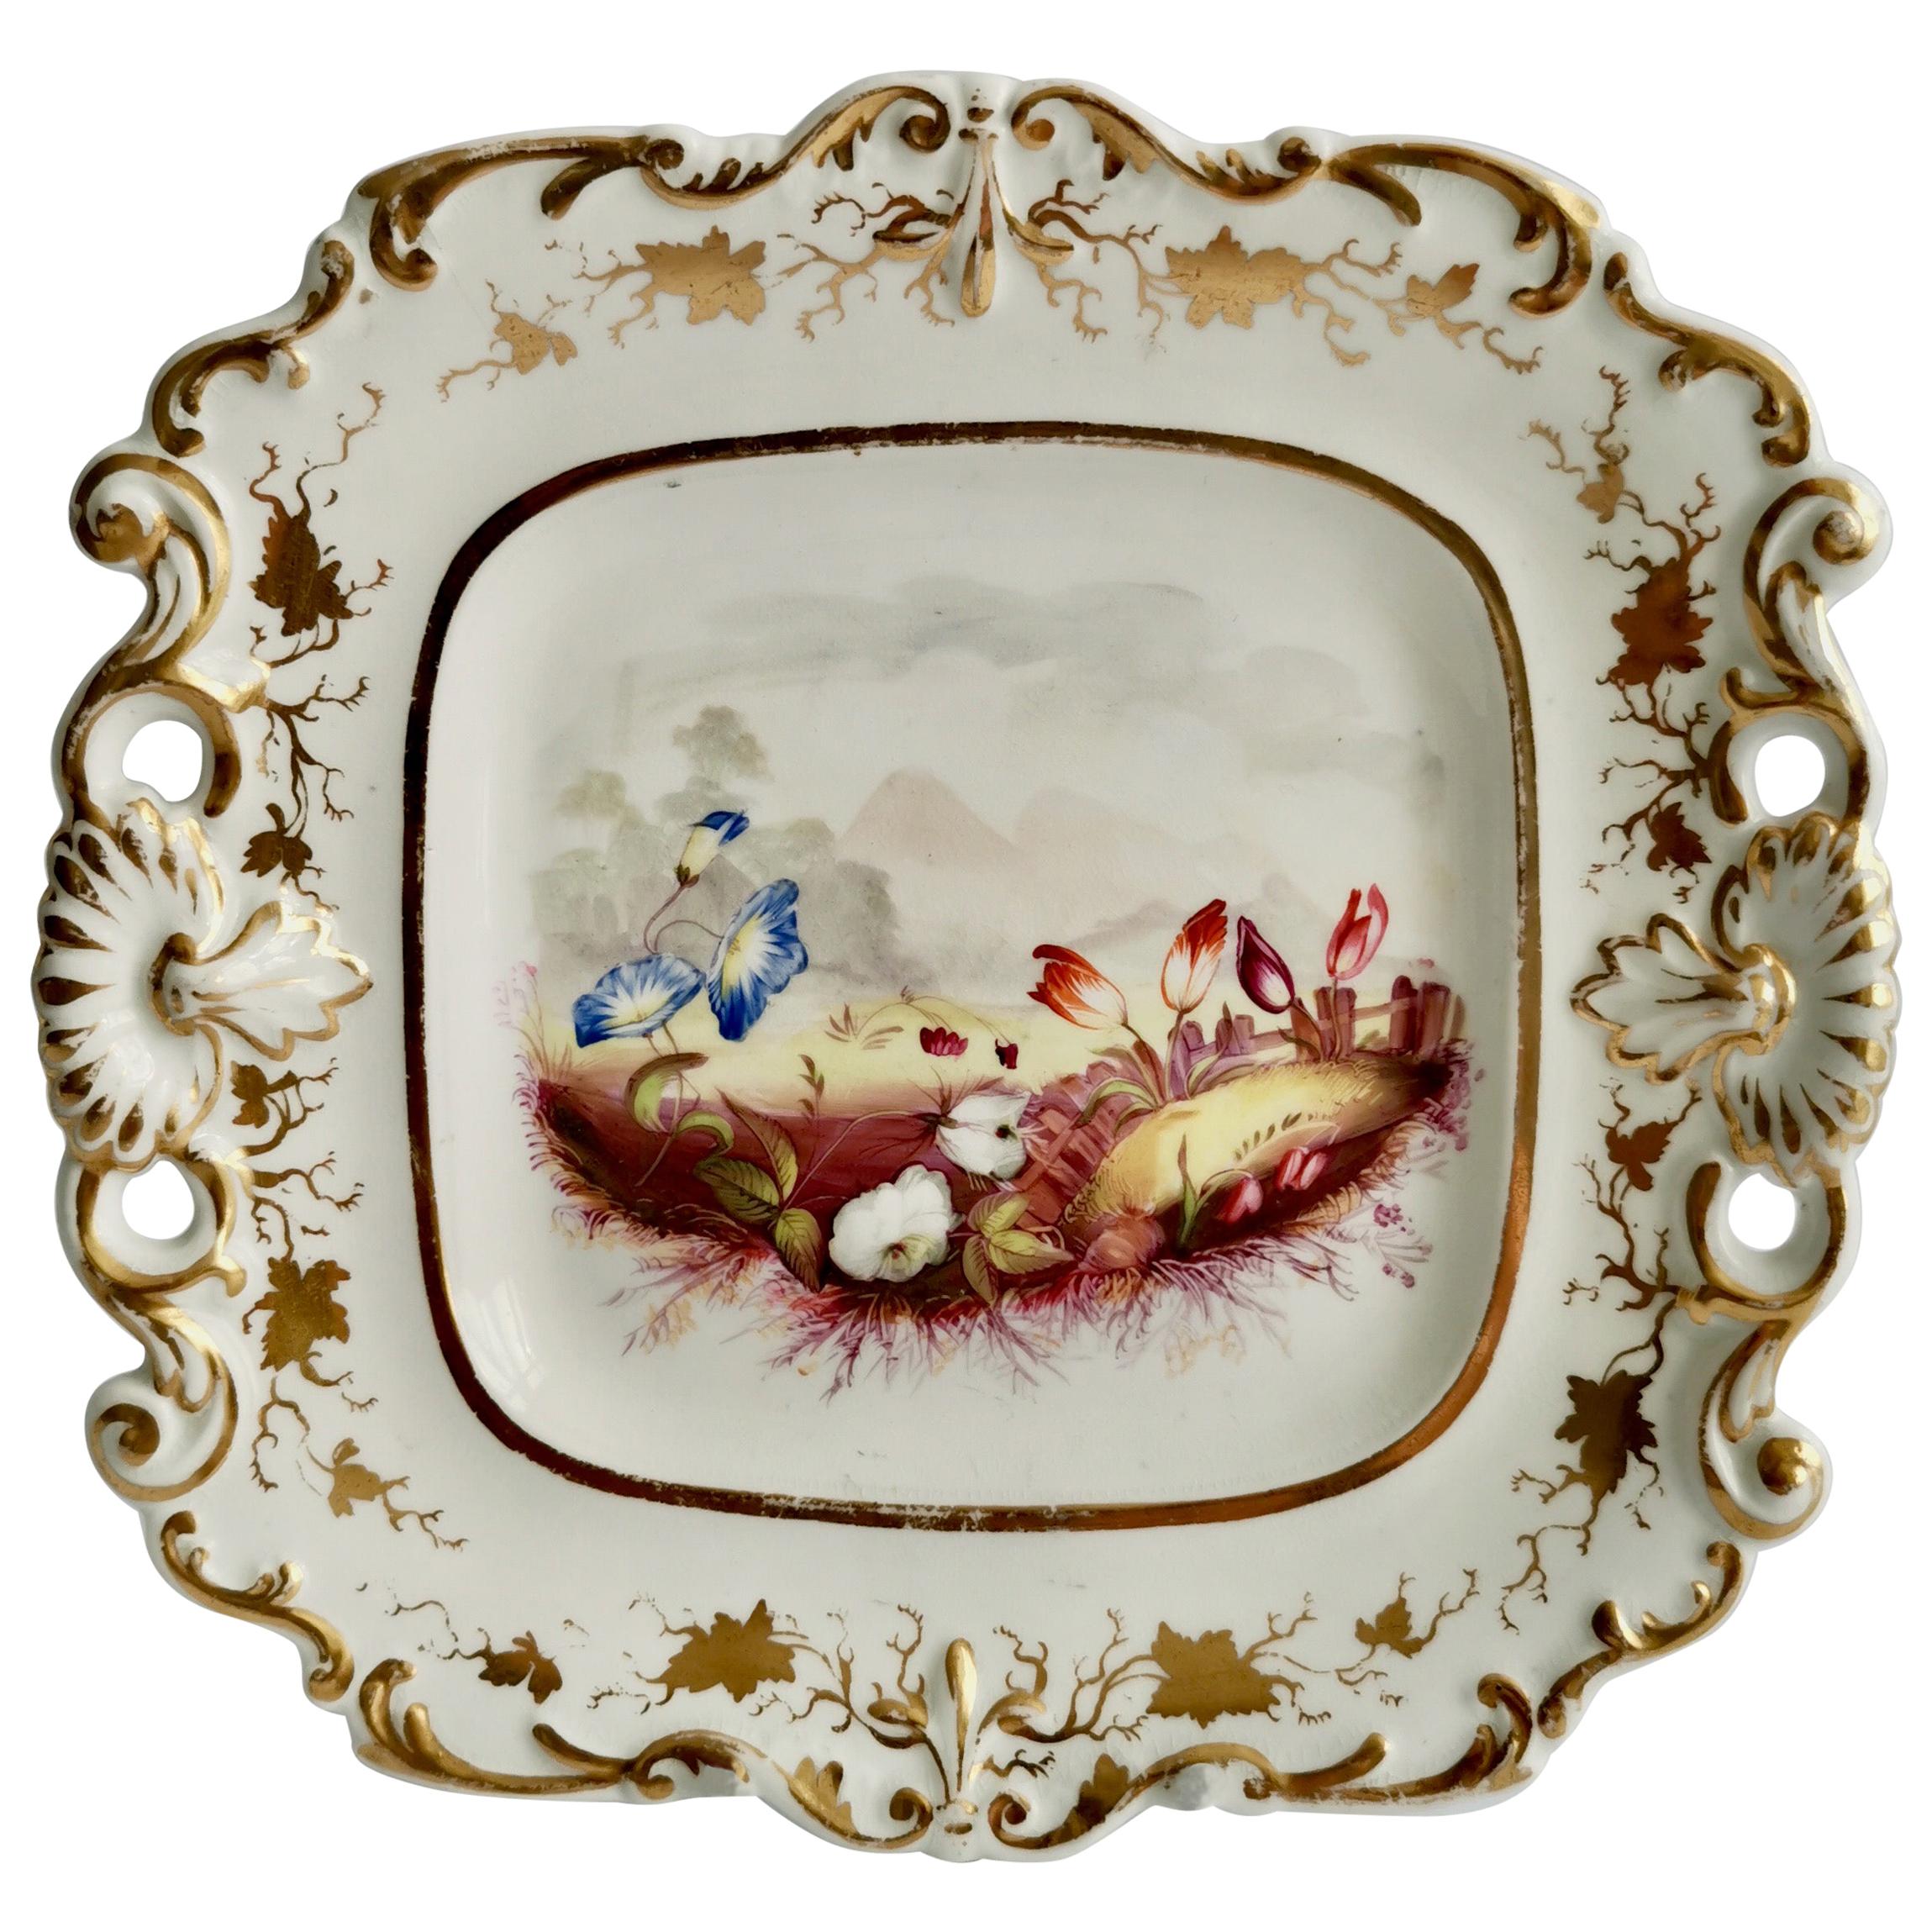 Samuel Alcock Porcelain Dish with Flowers, Provenance Godden, Regency circa 1820